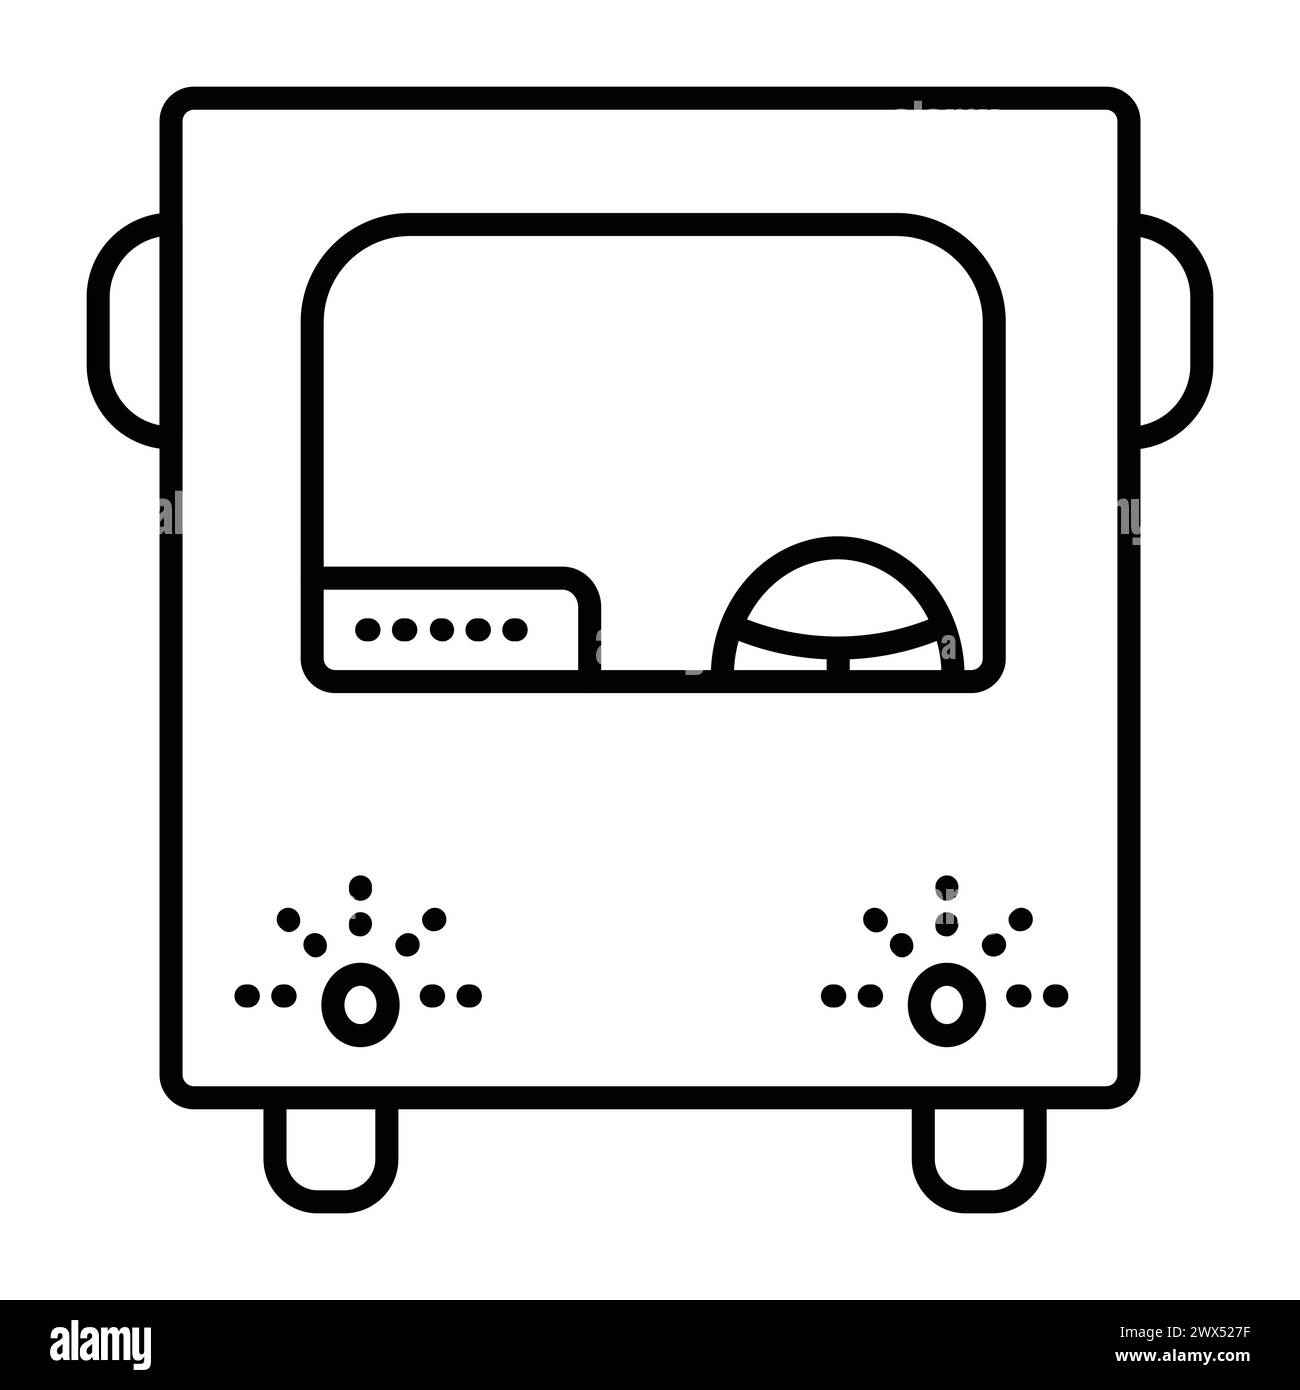 Bus black line vector icon, monochrome public transport symbol Stock Vector